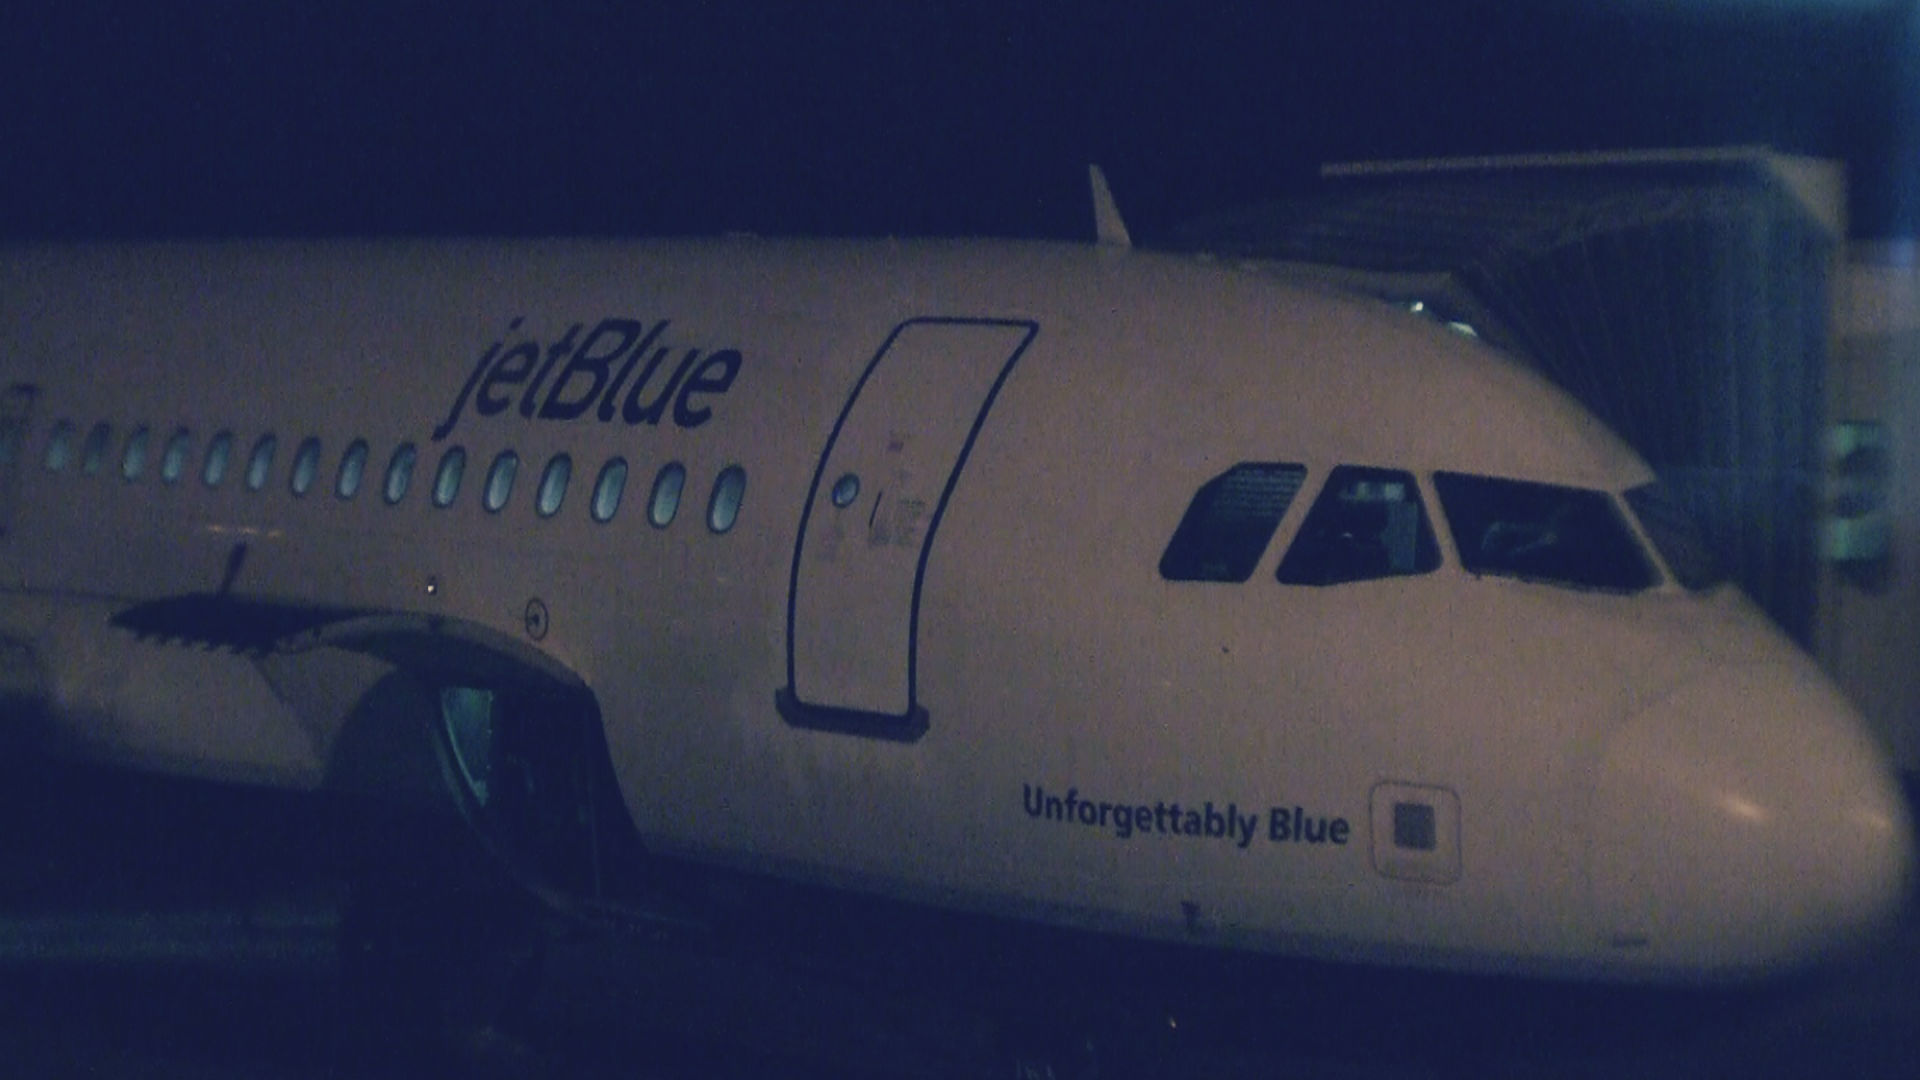 JetBlue Unforgettably Blue A320